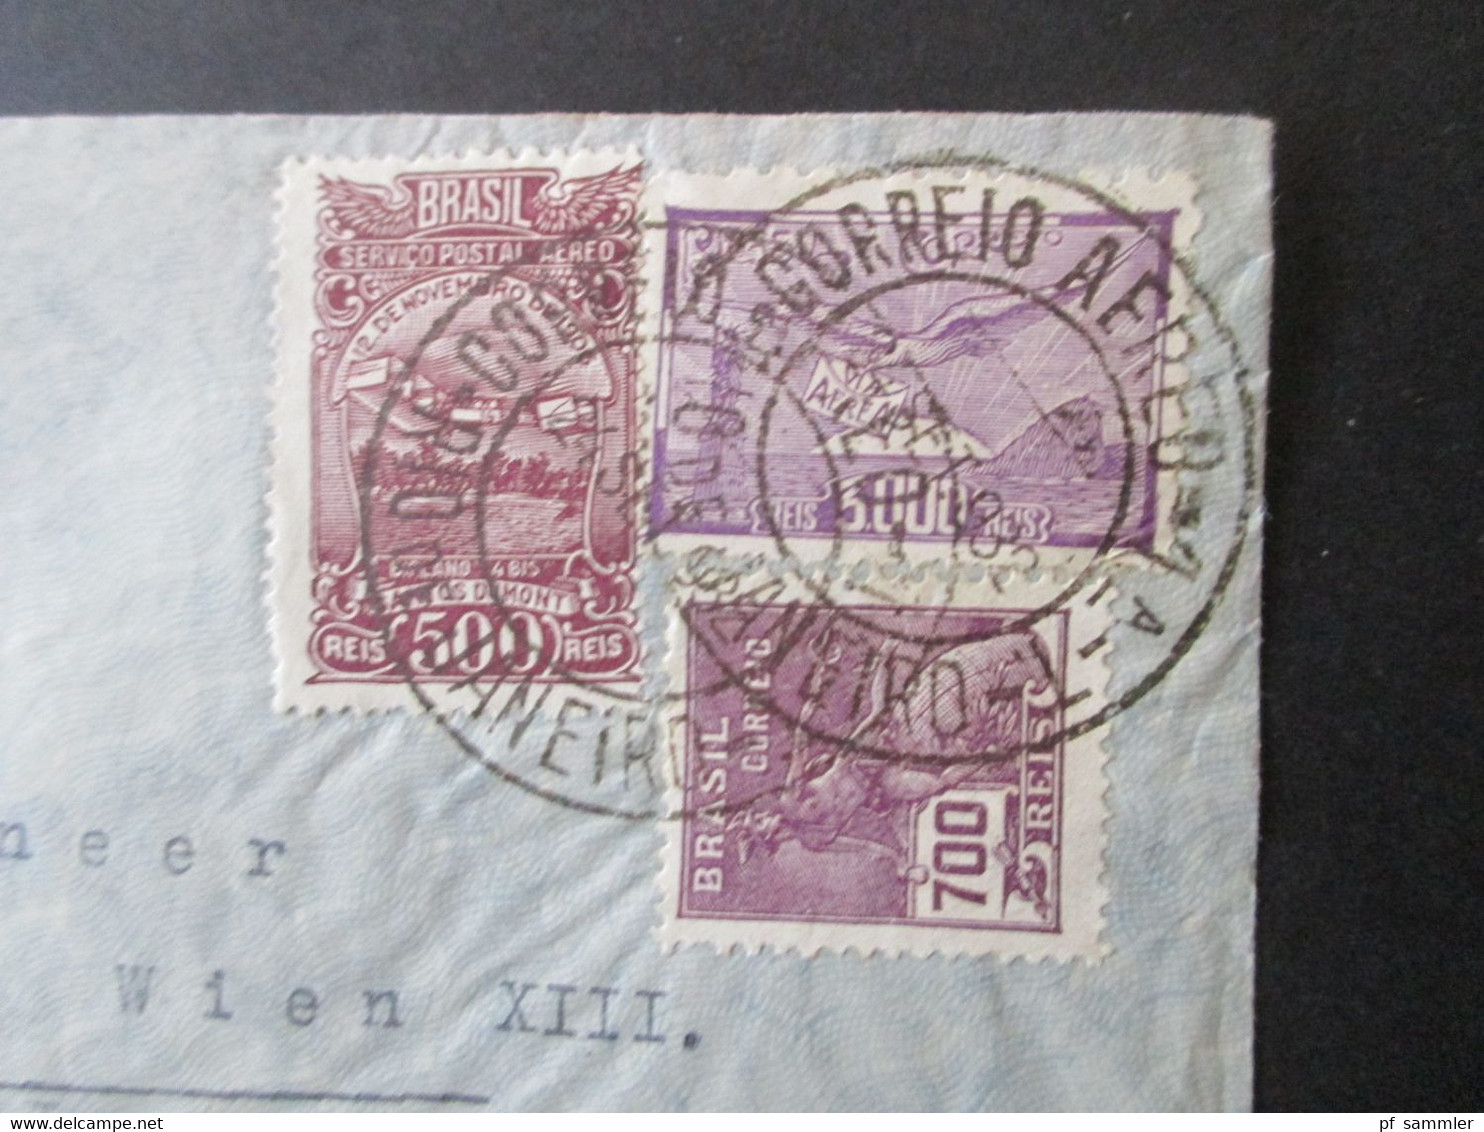 Brasilien 1932 Luftpostbeleg Violetter Stempel Via Aeropostale Mit Flugpostmarke Nr. 337 Nach Wien Gesendet - Covers & Documents